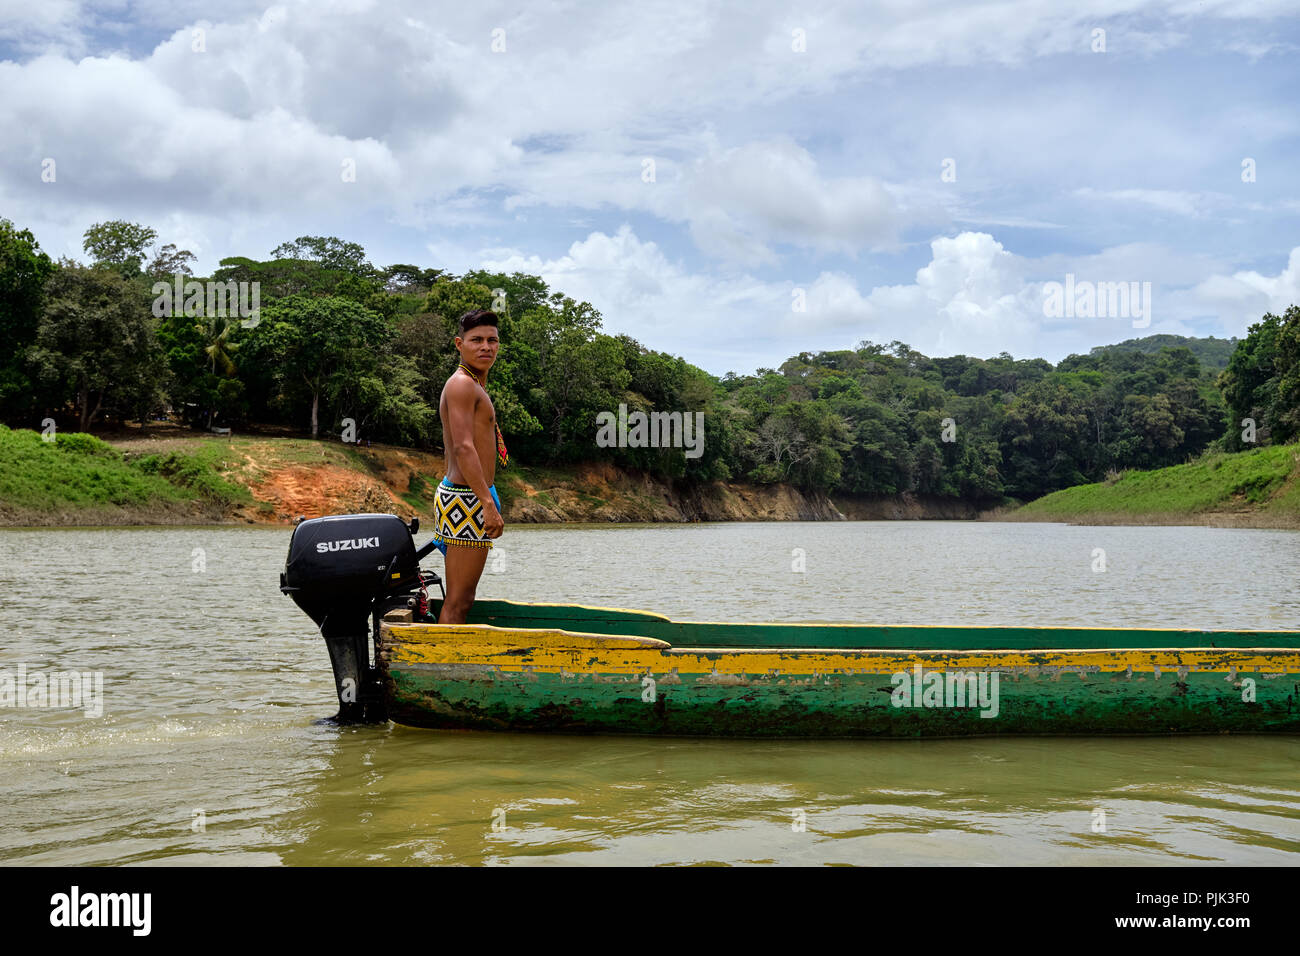 Chagres National Park, Panama - April 22, 2018: Native Embera man steering a dugout canoe along the river Stock Photo